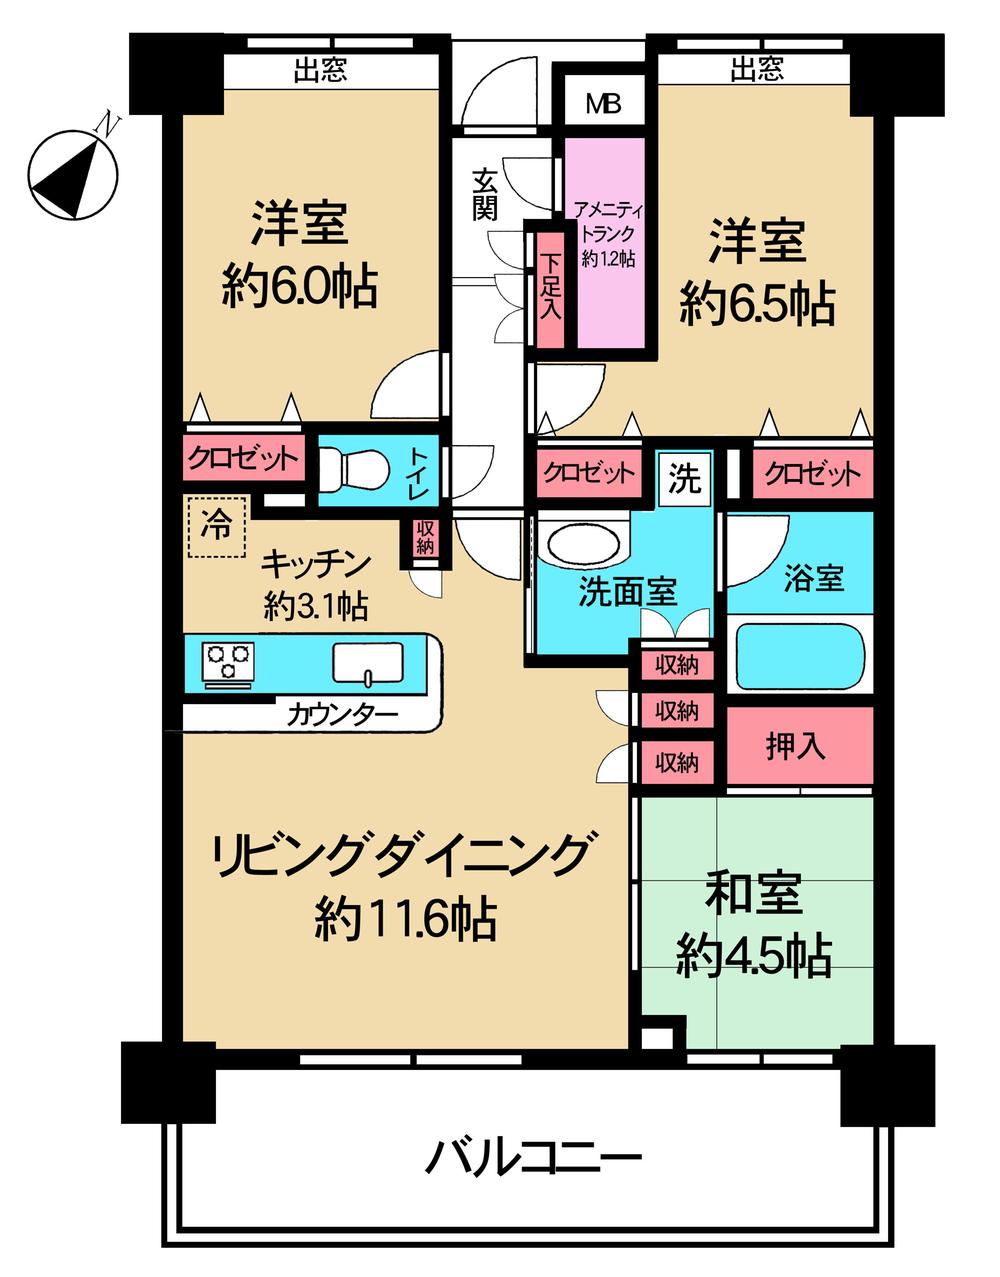 Floor plan. 3LDK, Price 18.5 million yen, Occupied area 72.81 sq m , Balcony area 14.7 sq m floor plan